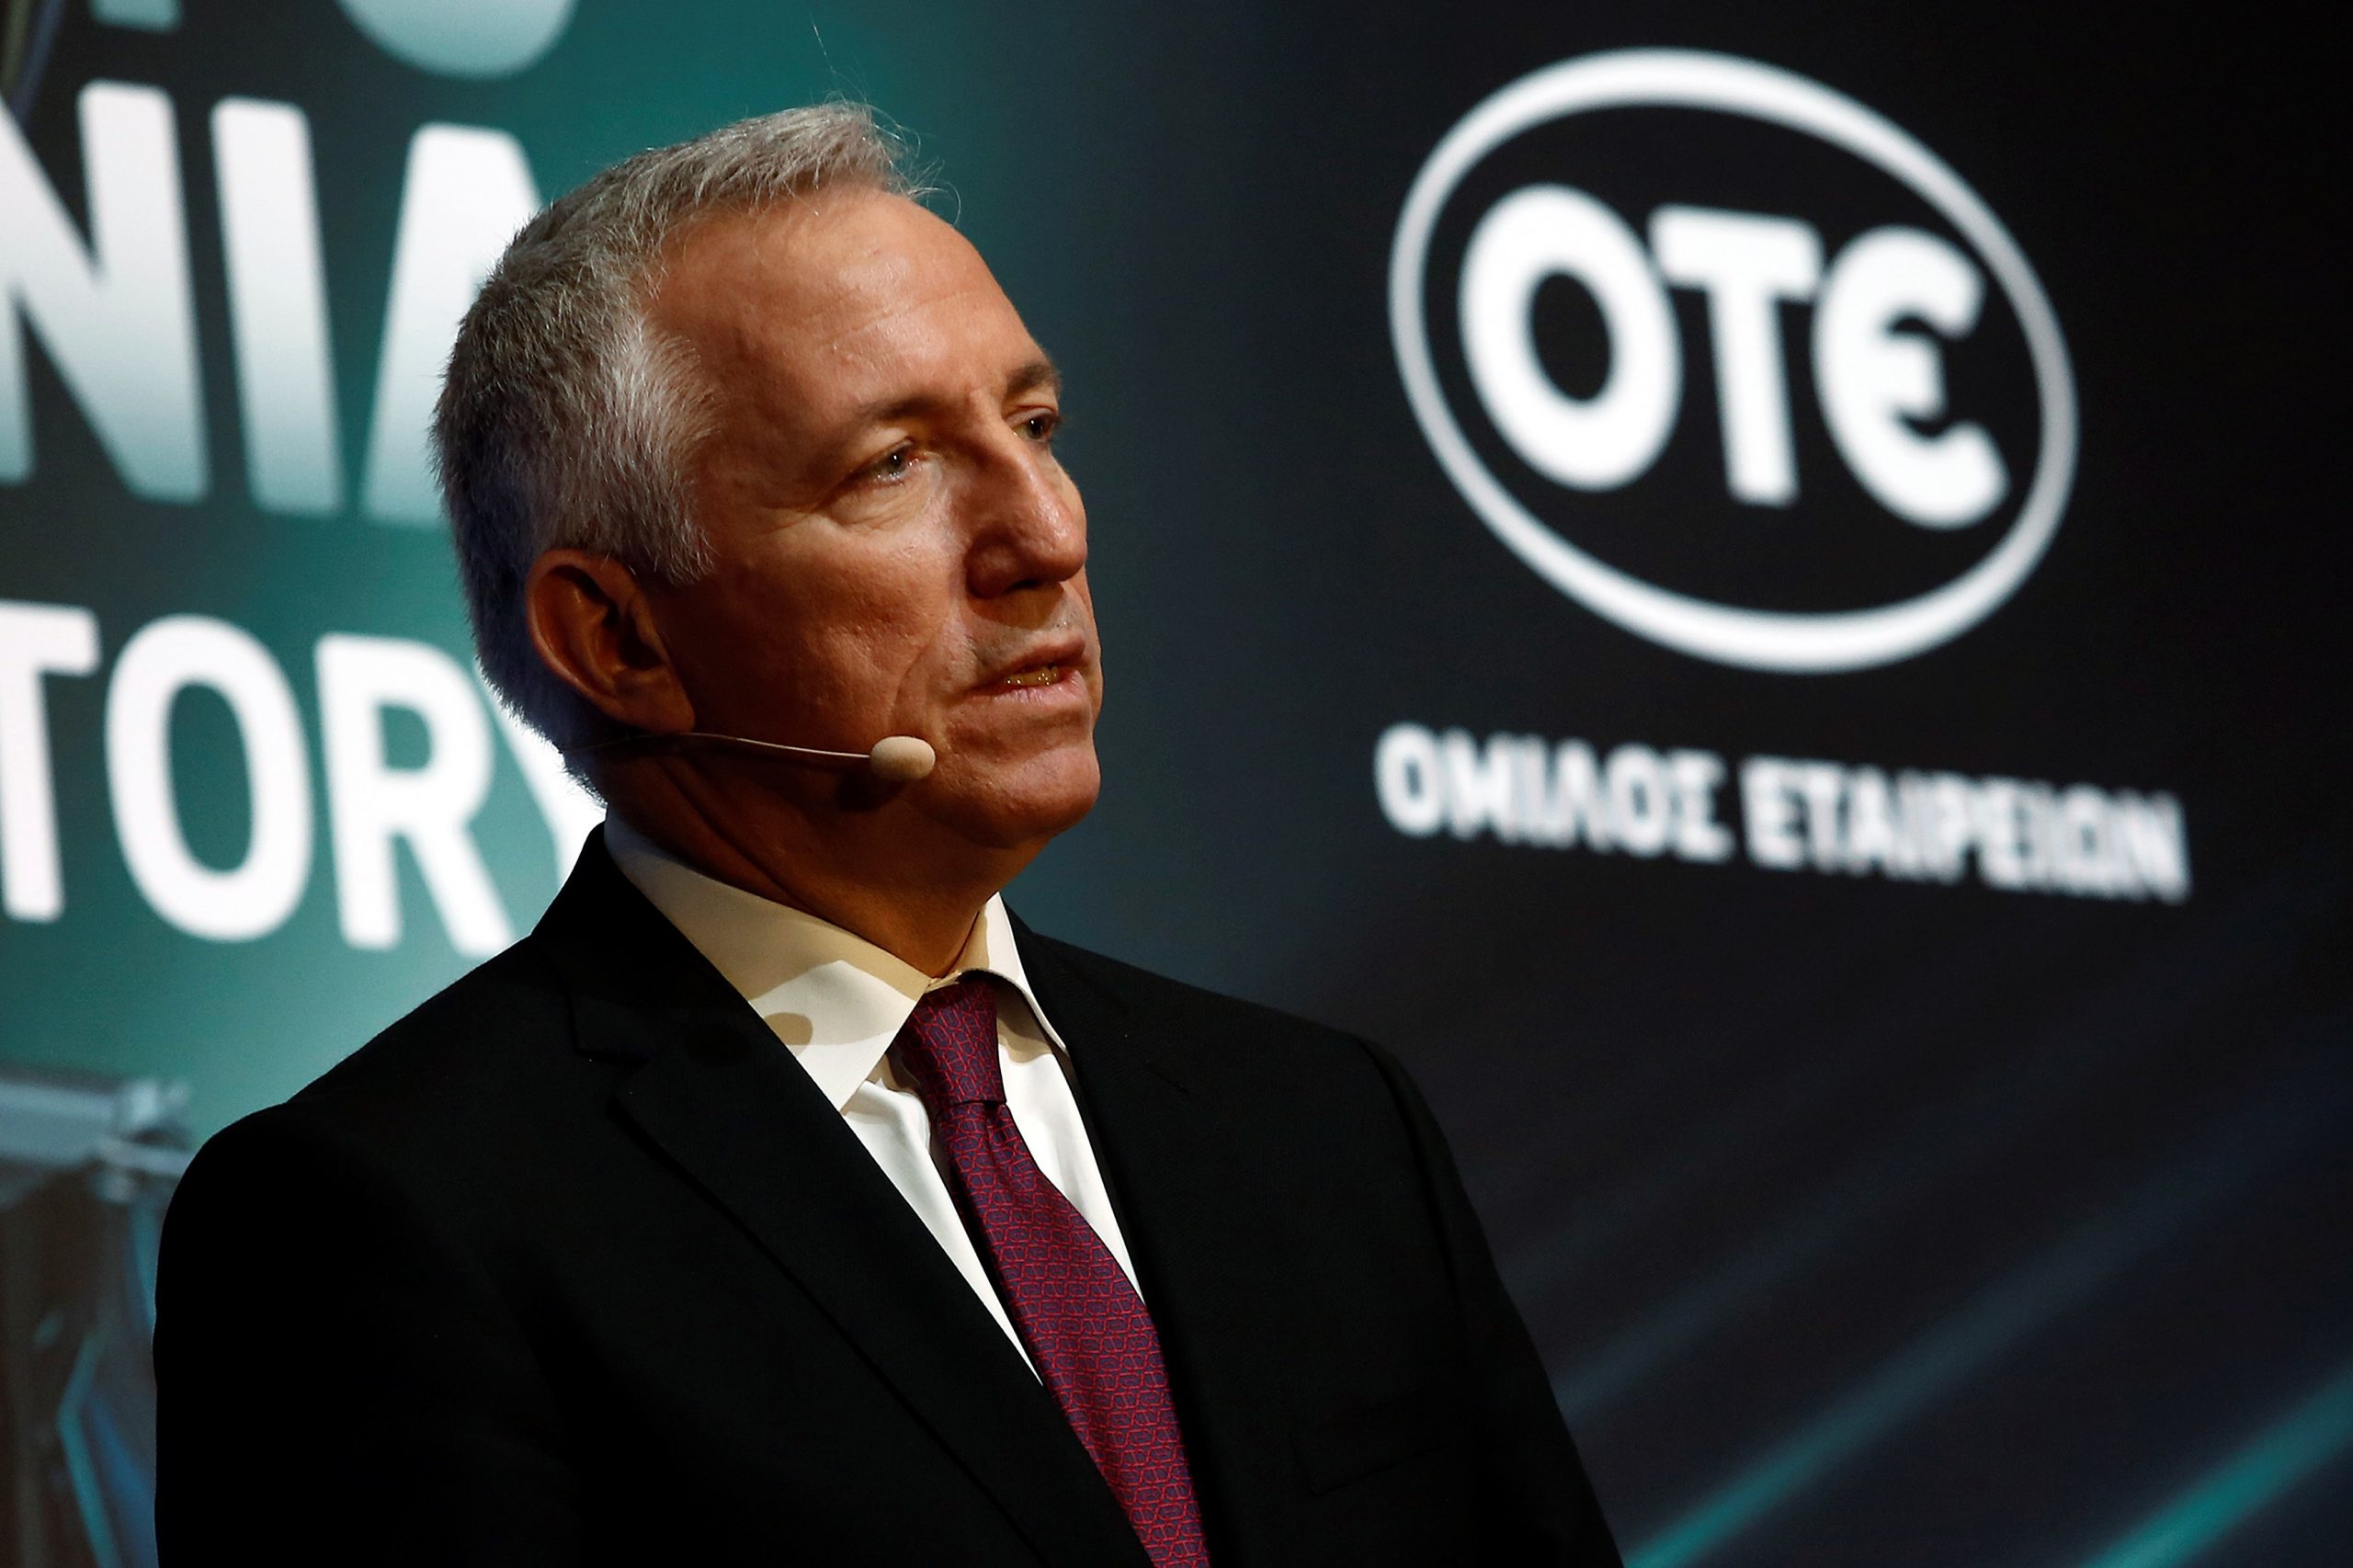 OTE Group CEO, Chairman Tsamaz to Step-Down Next June